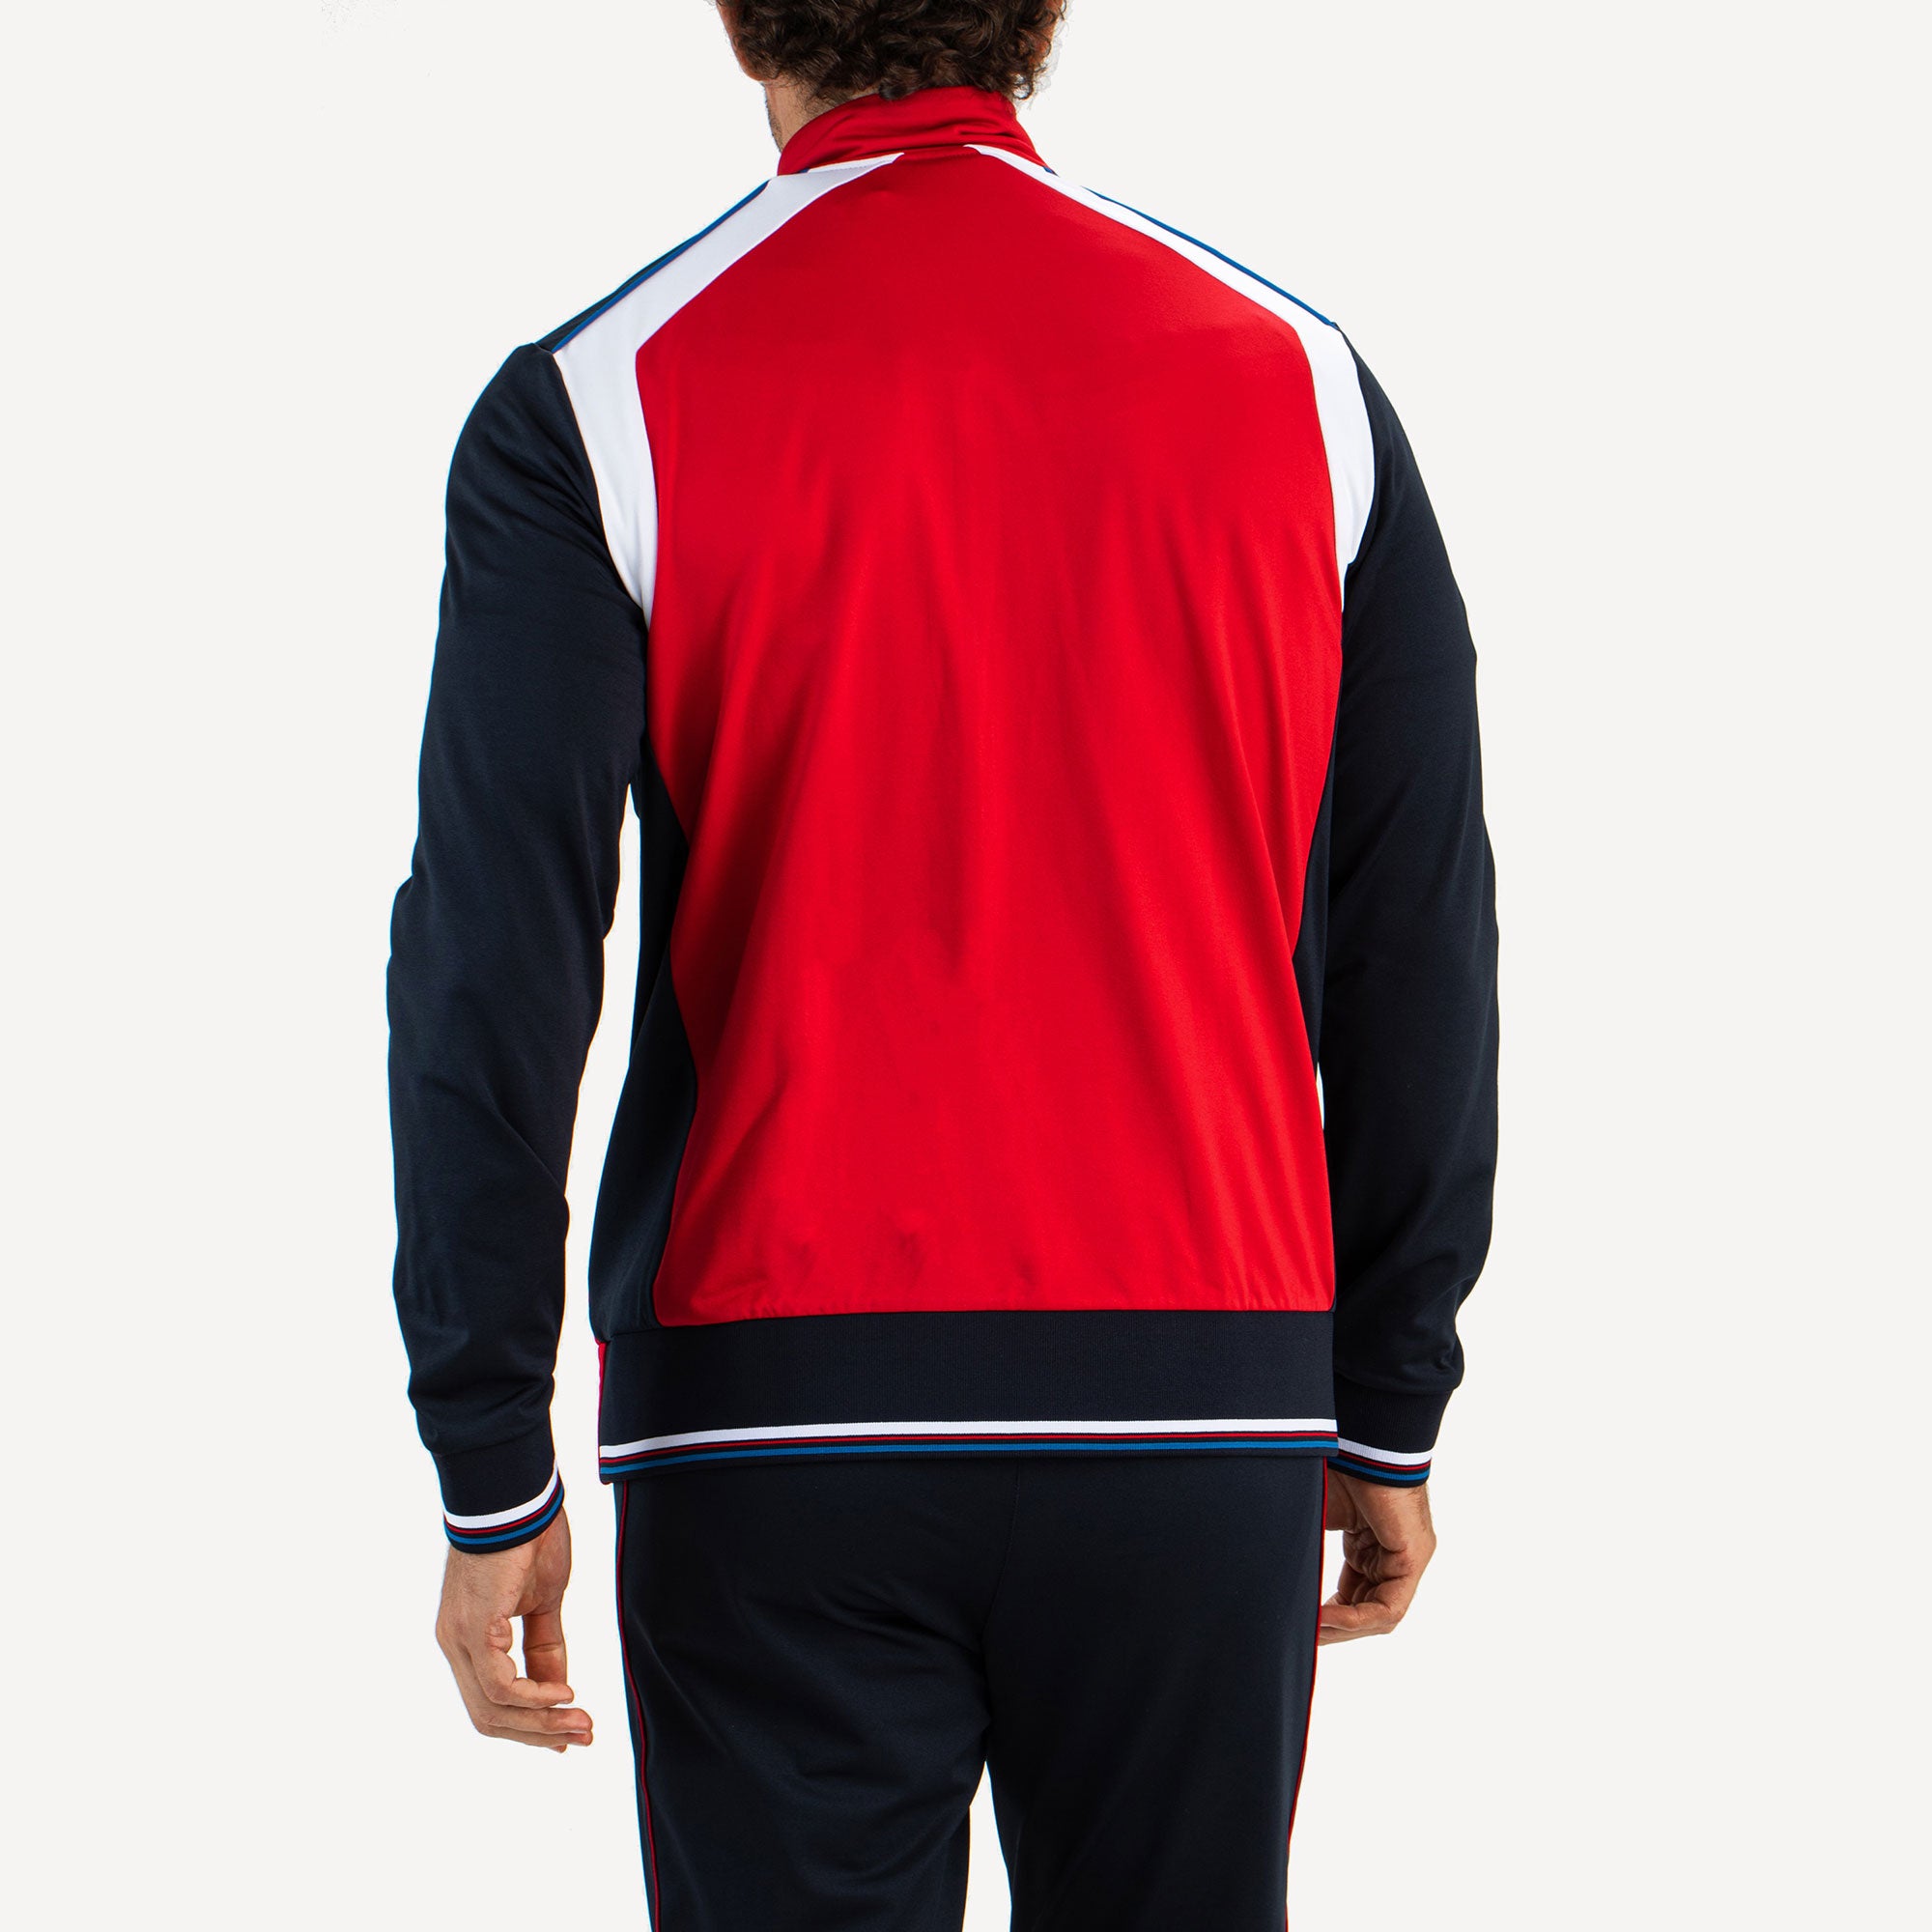 Sjeng Sports Iggy Men's Tennis Jacket Red (2)